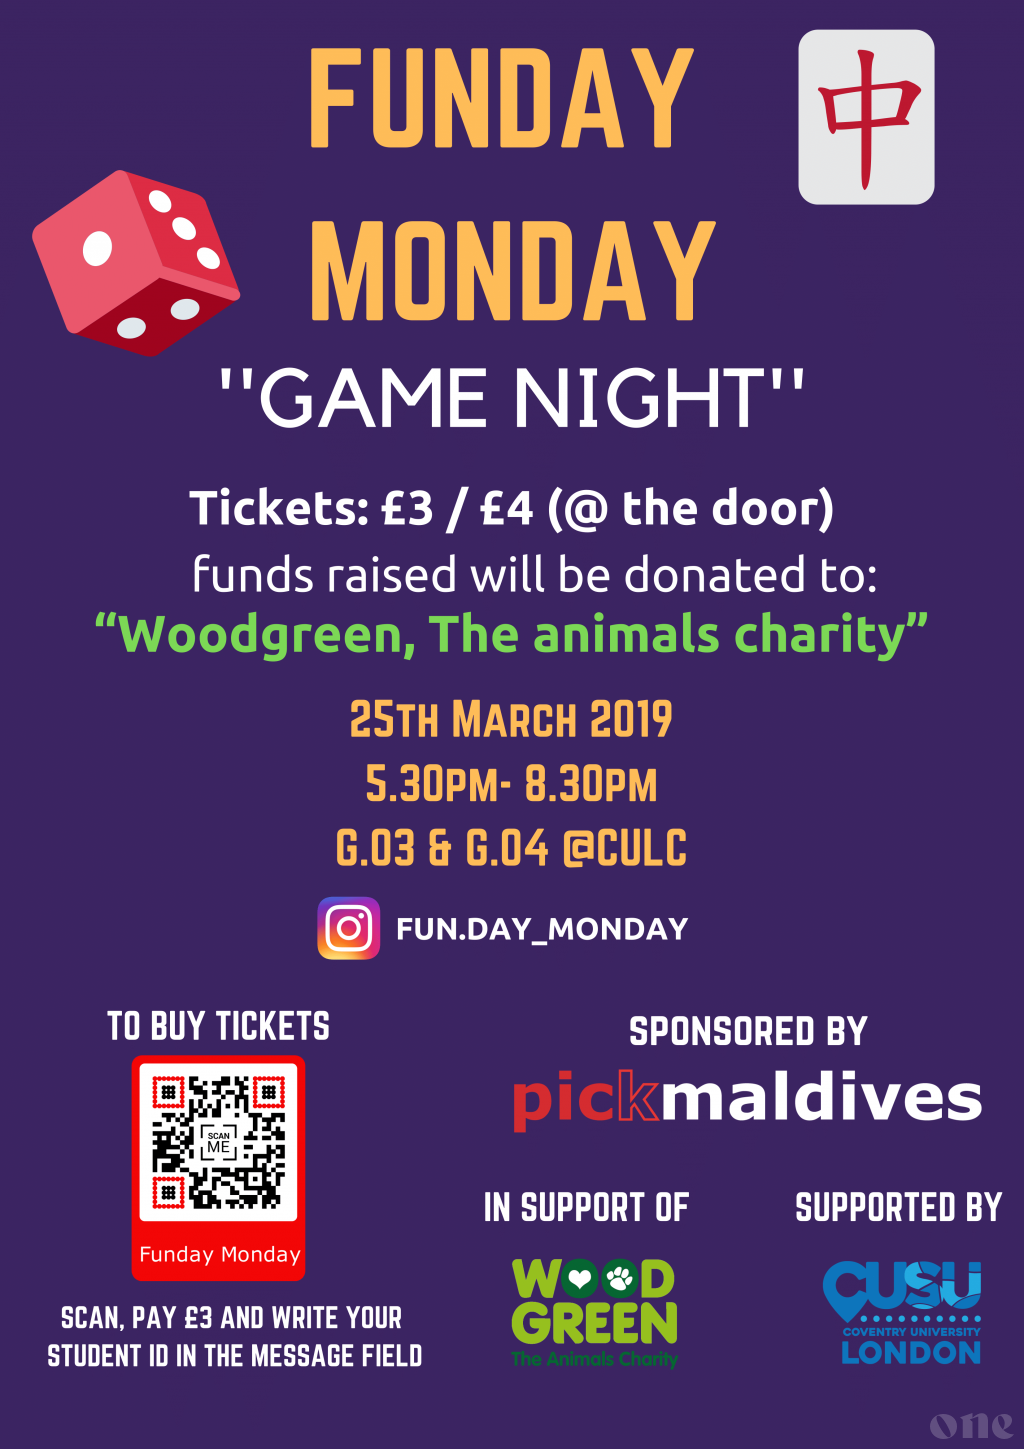 PICK MALDIVES sponsors 'Game Night' in London